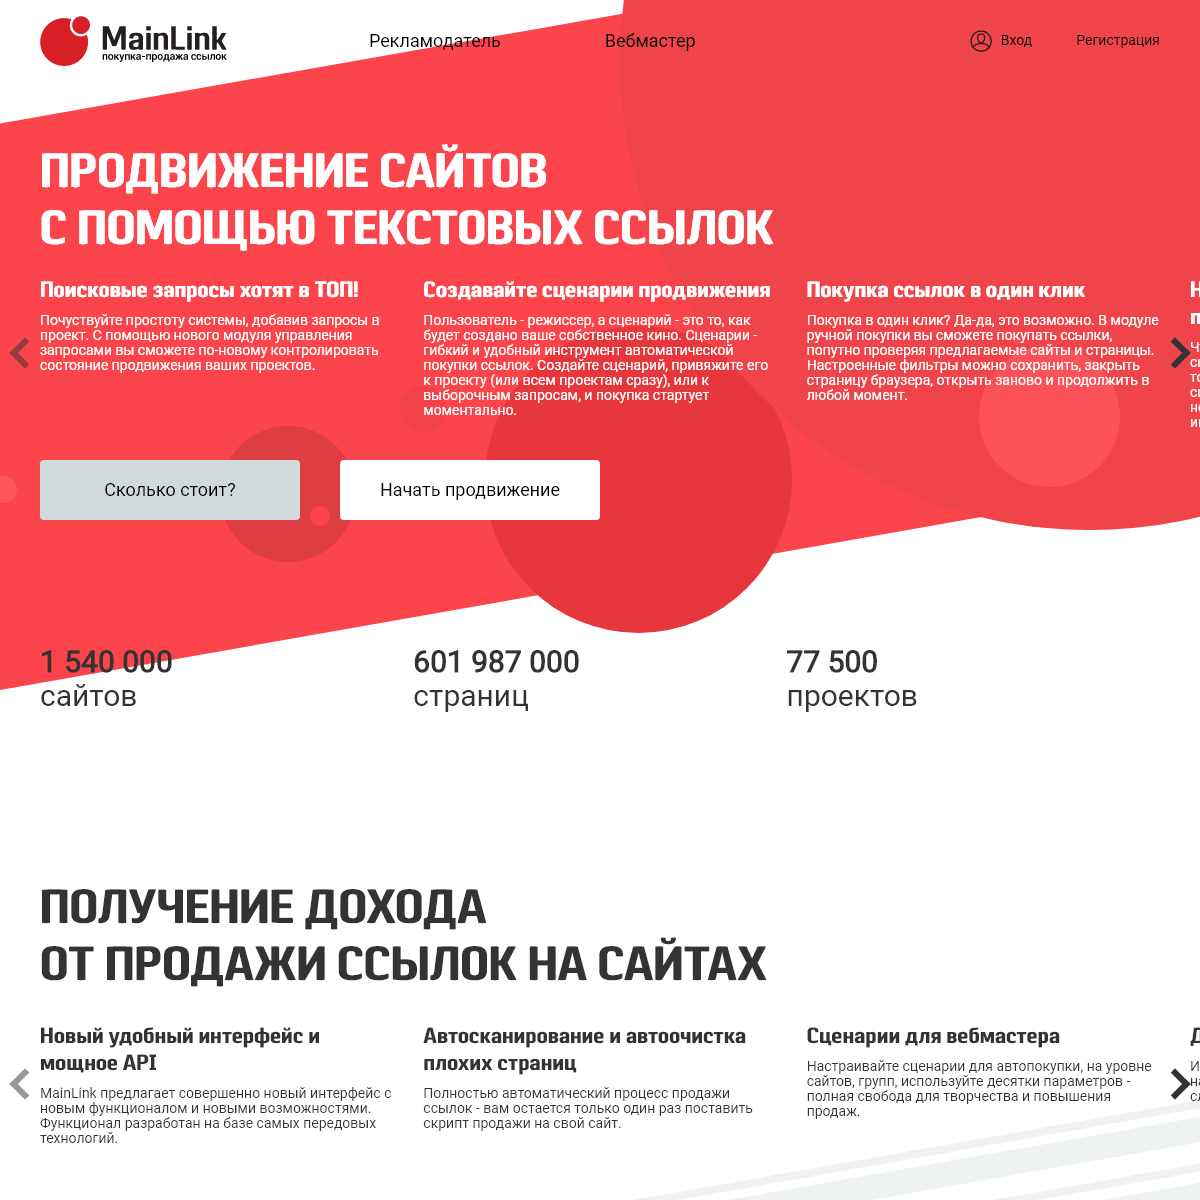 A complete backup of mainlink.ru